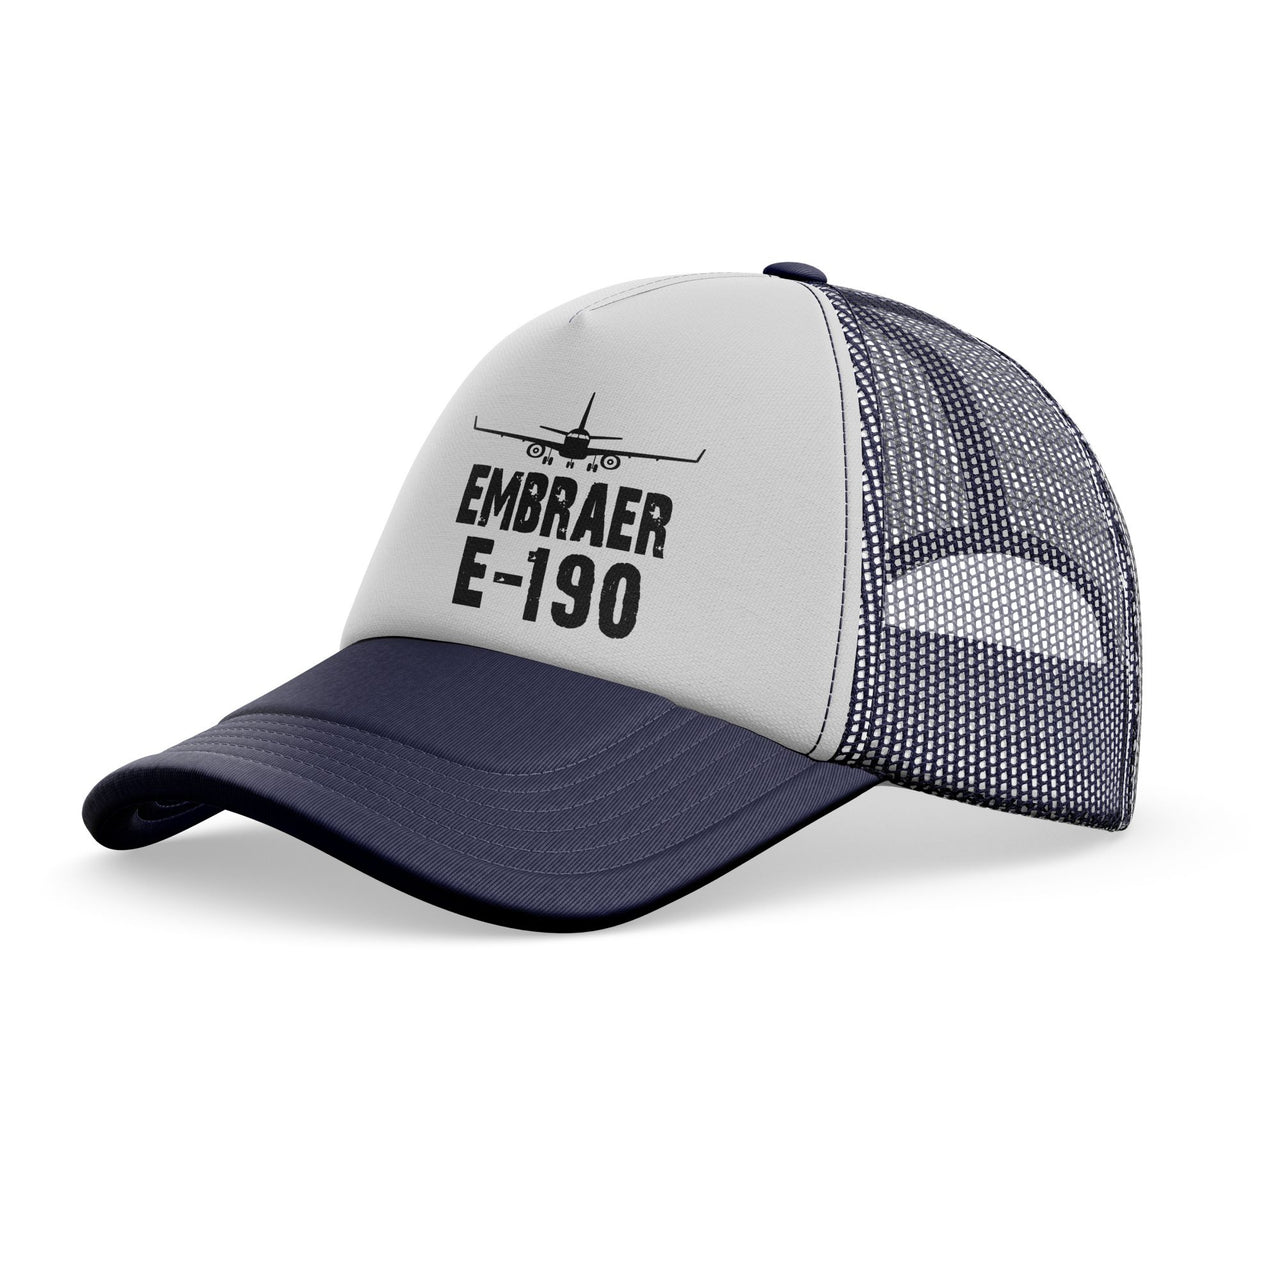 Embraer E-190 & Plane Designed Trucker Caps & Hats